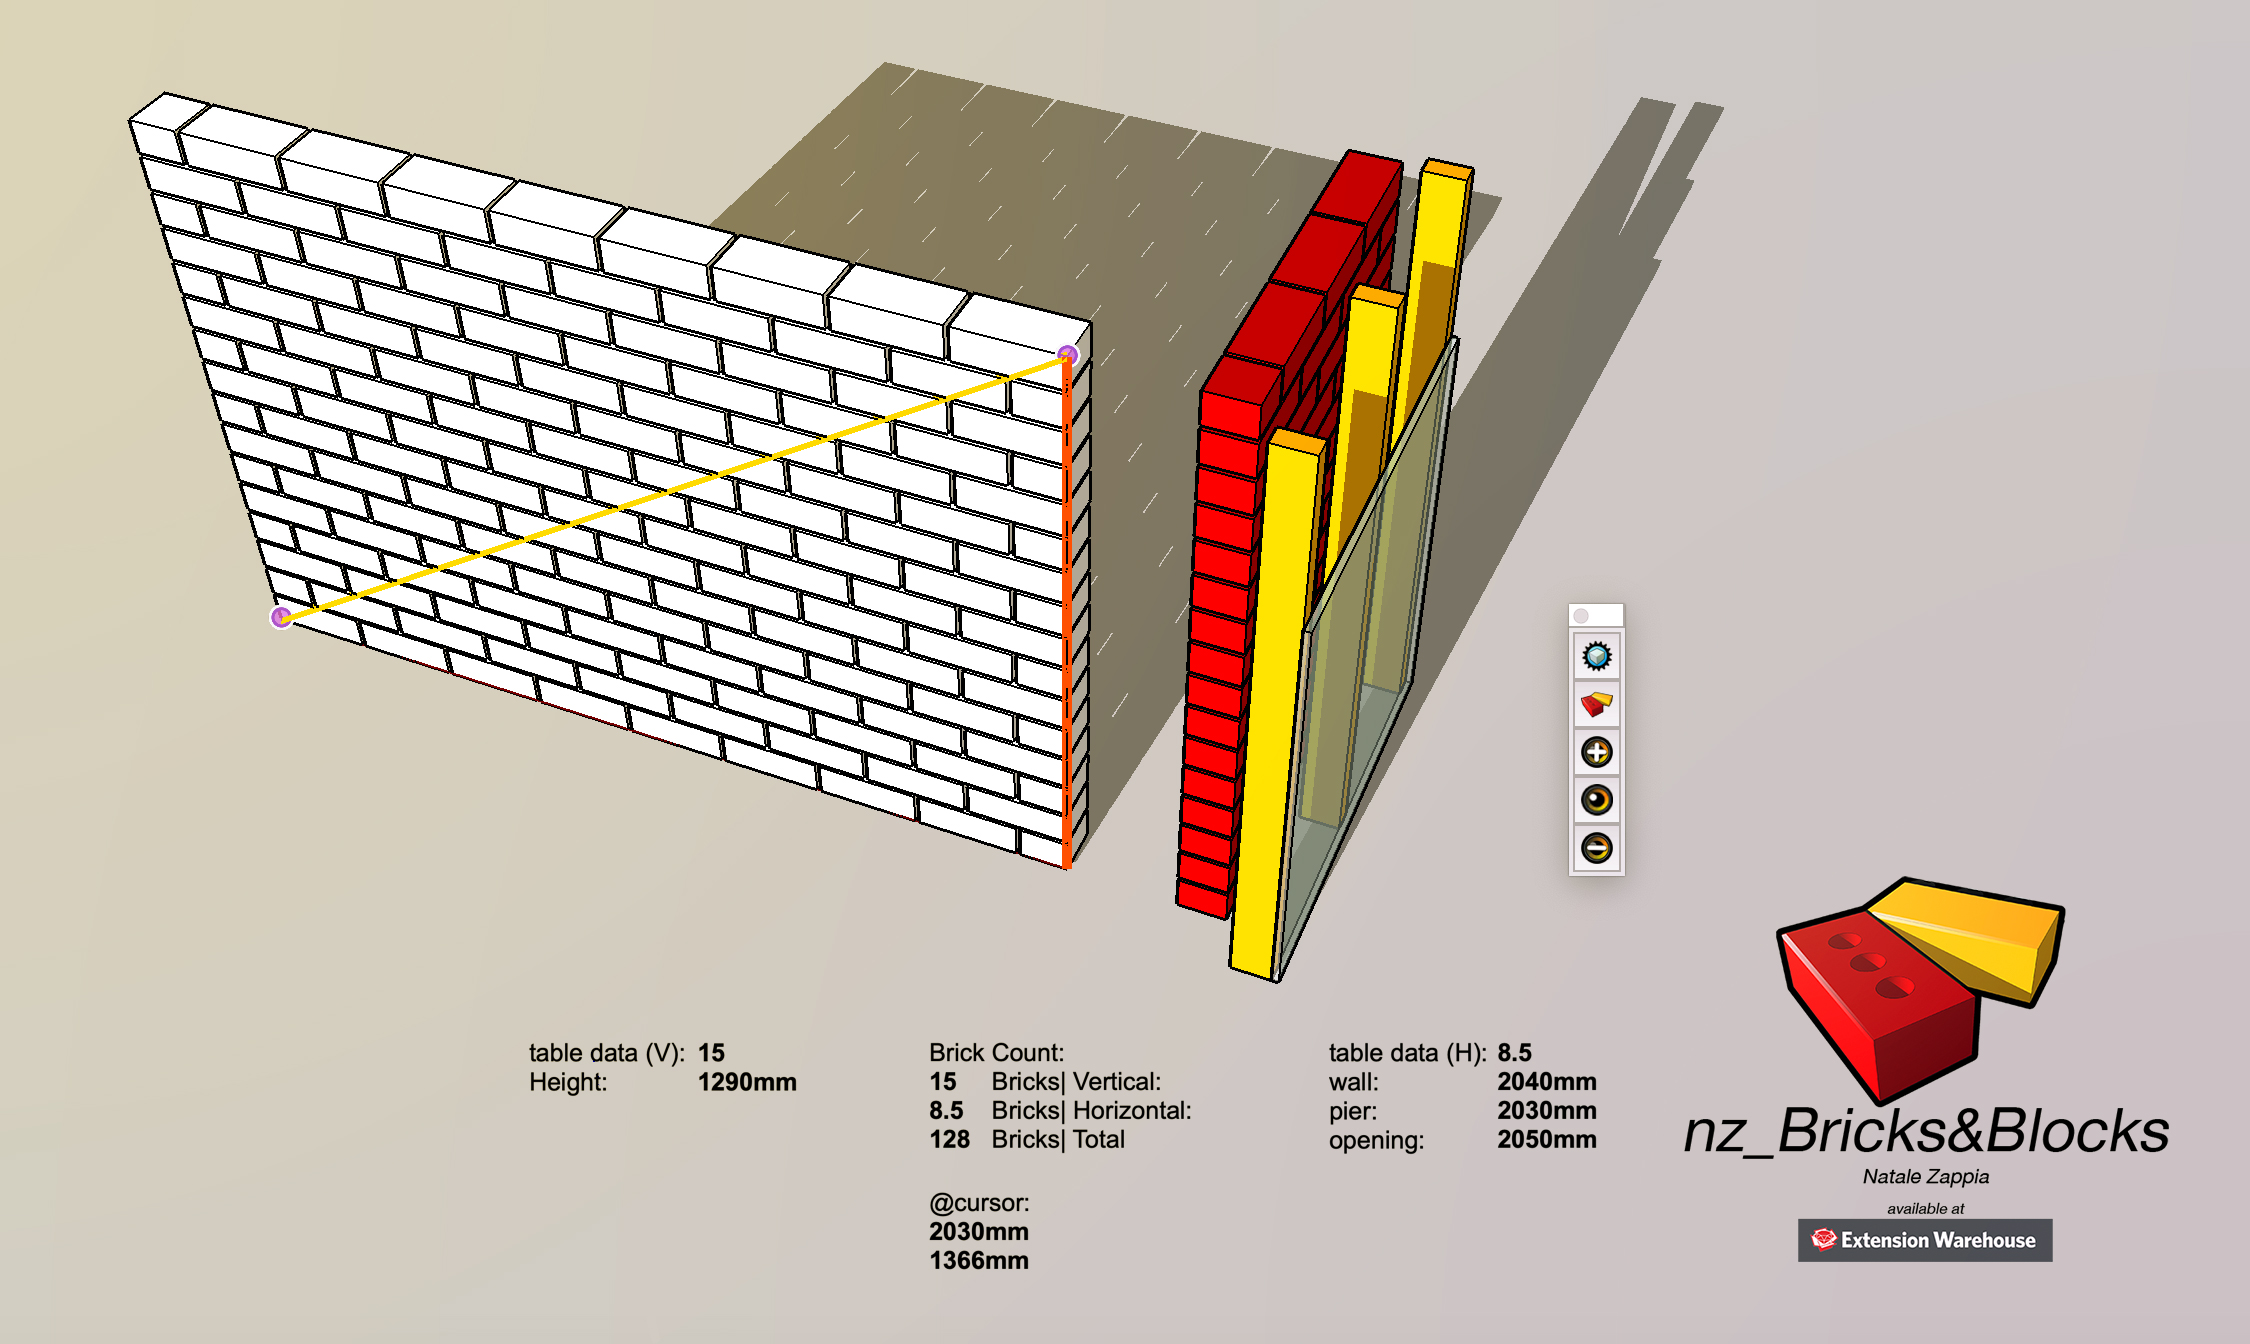 nz_Bricks&Blocks